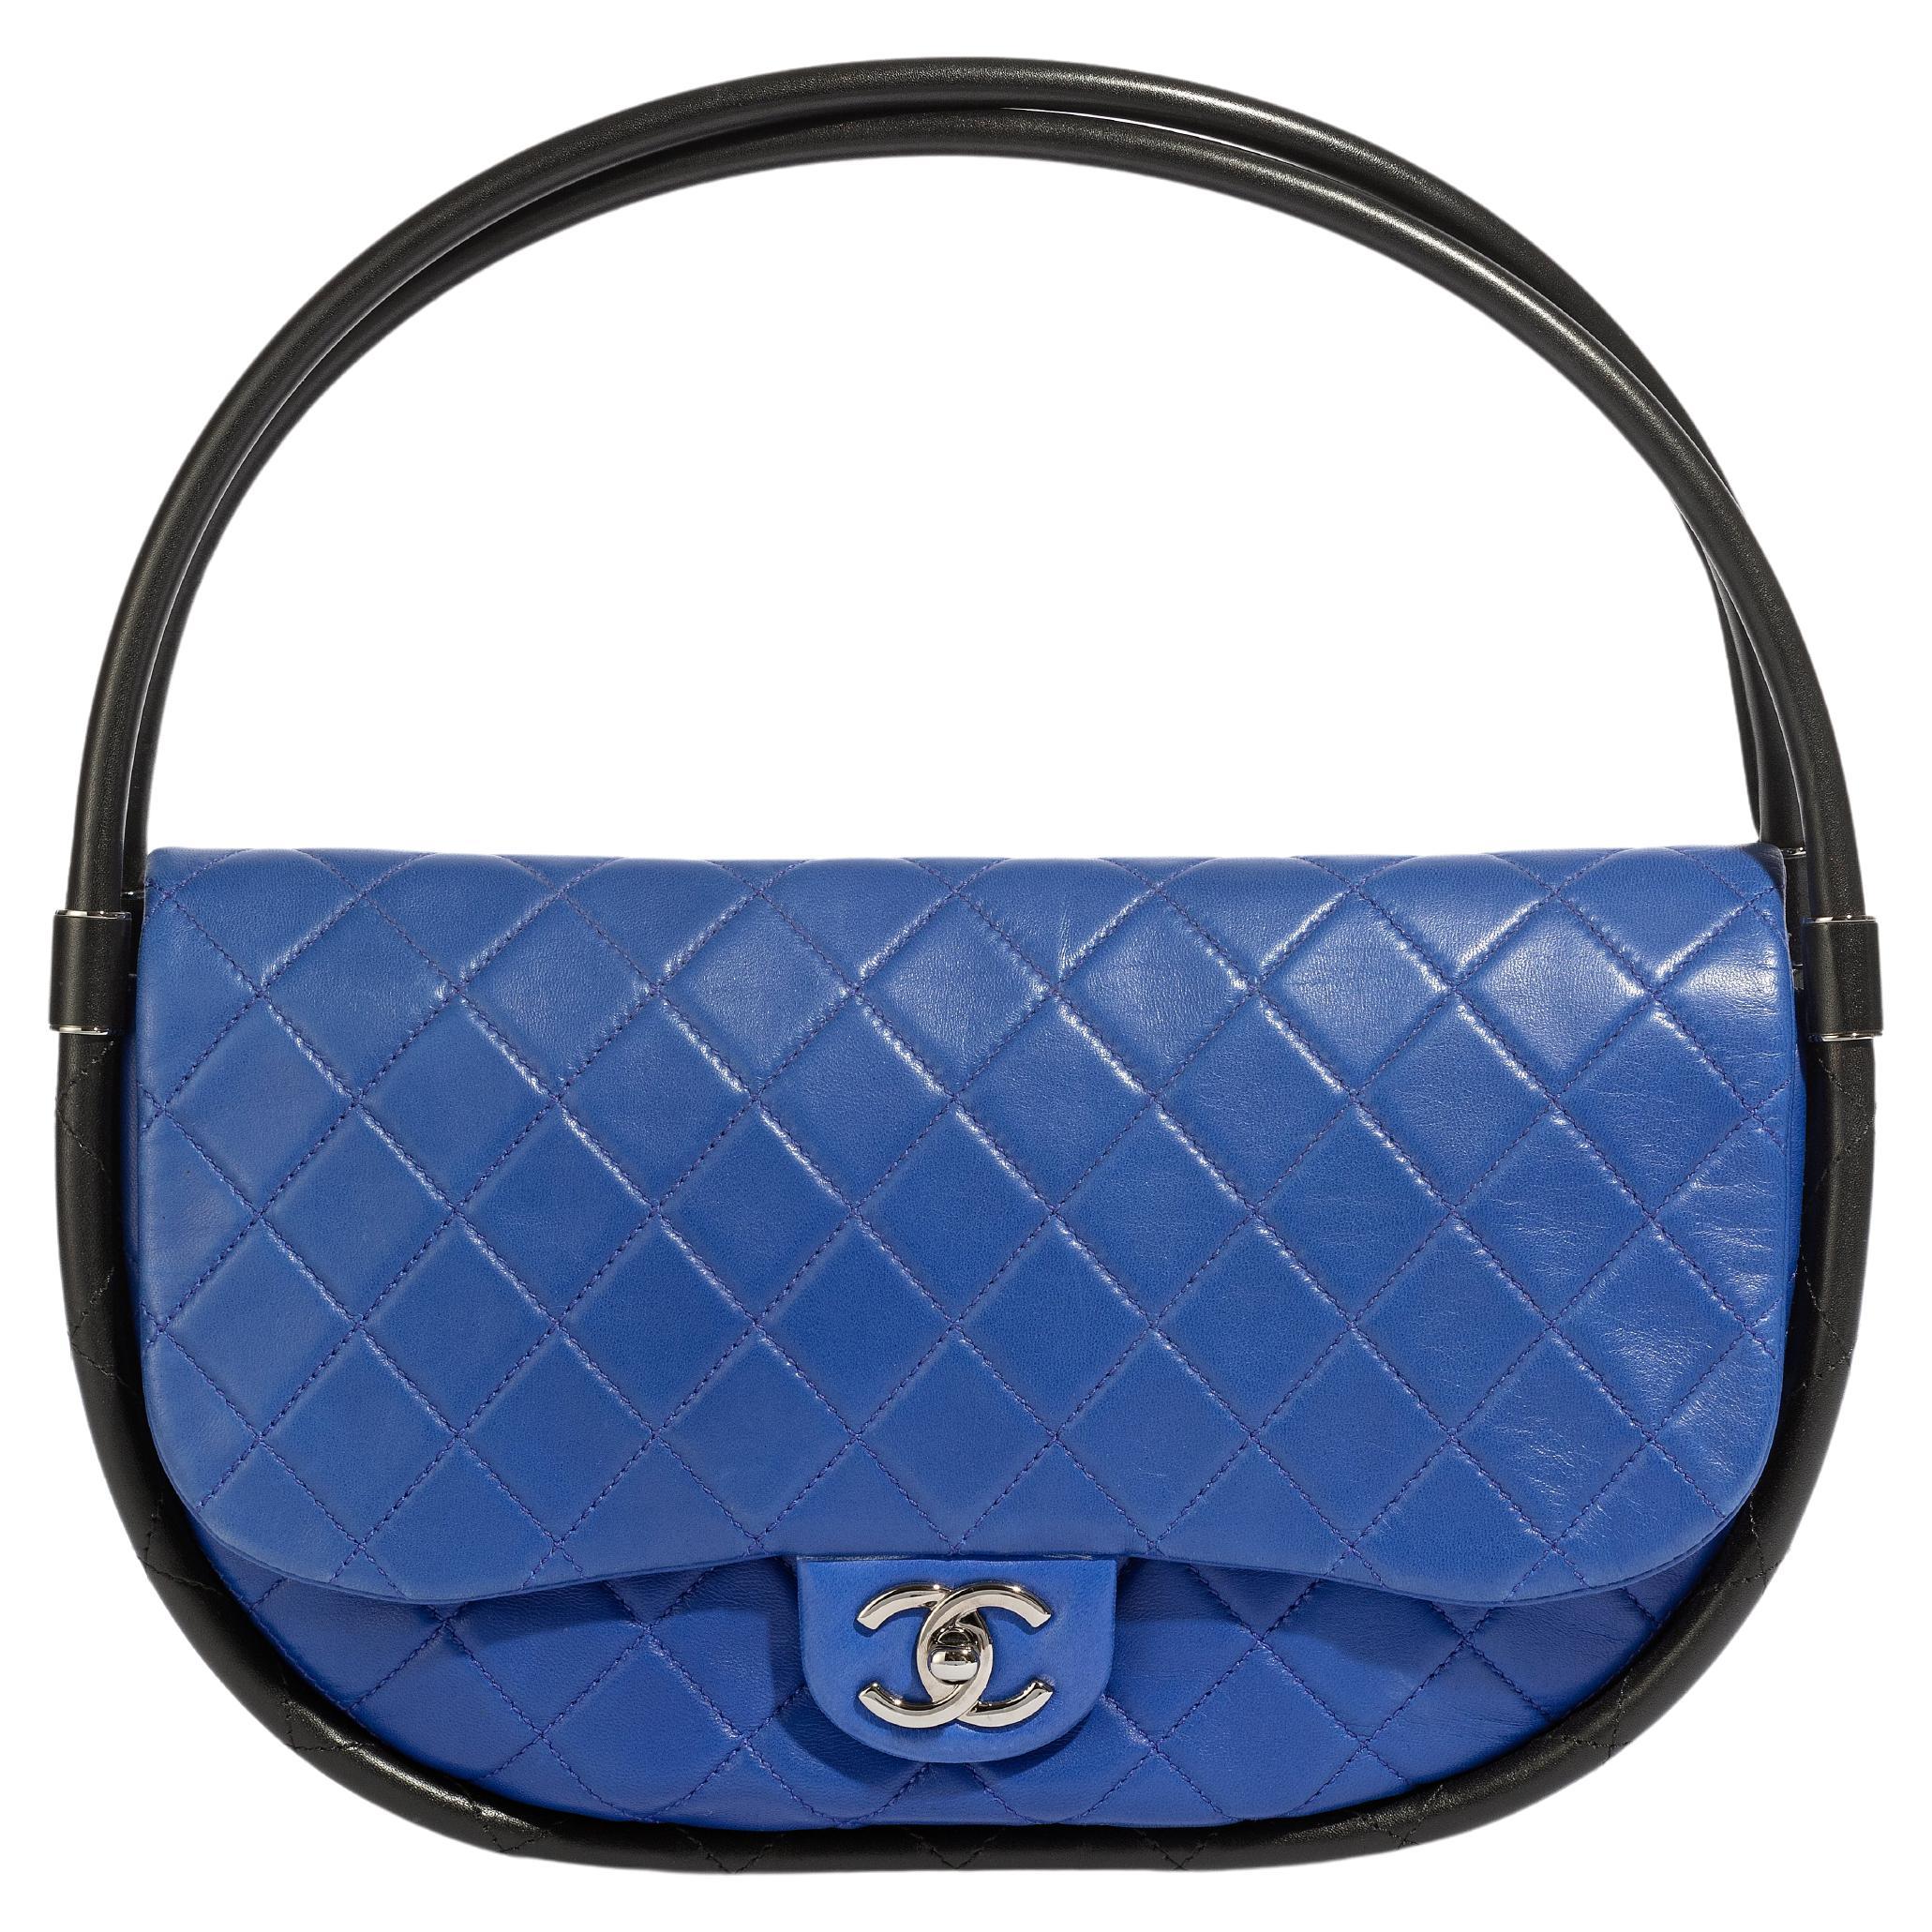 Chanel Hula Hoop Bag - Karl Lagerfeld Explains